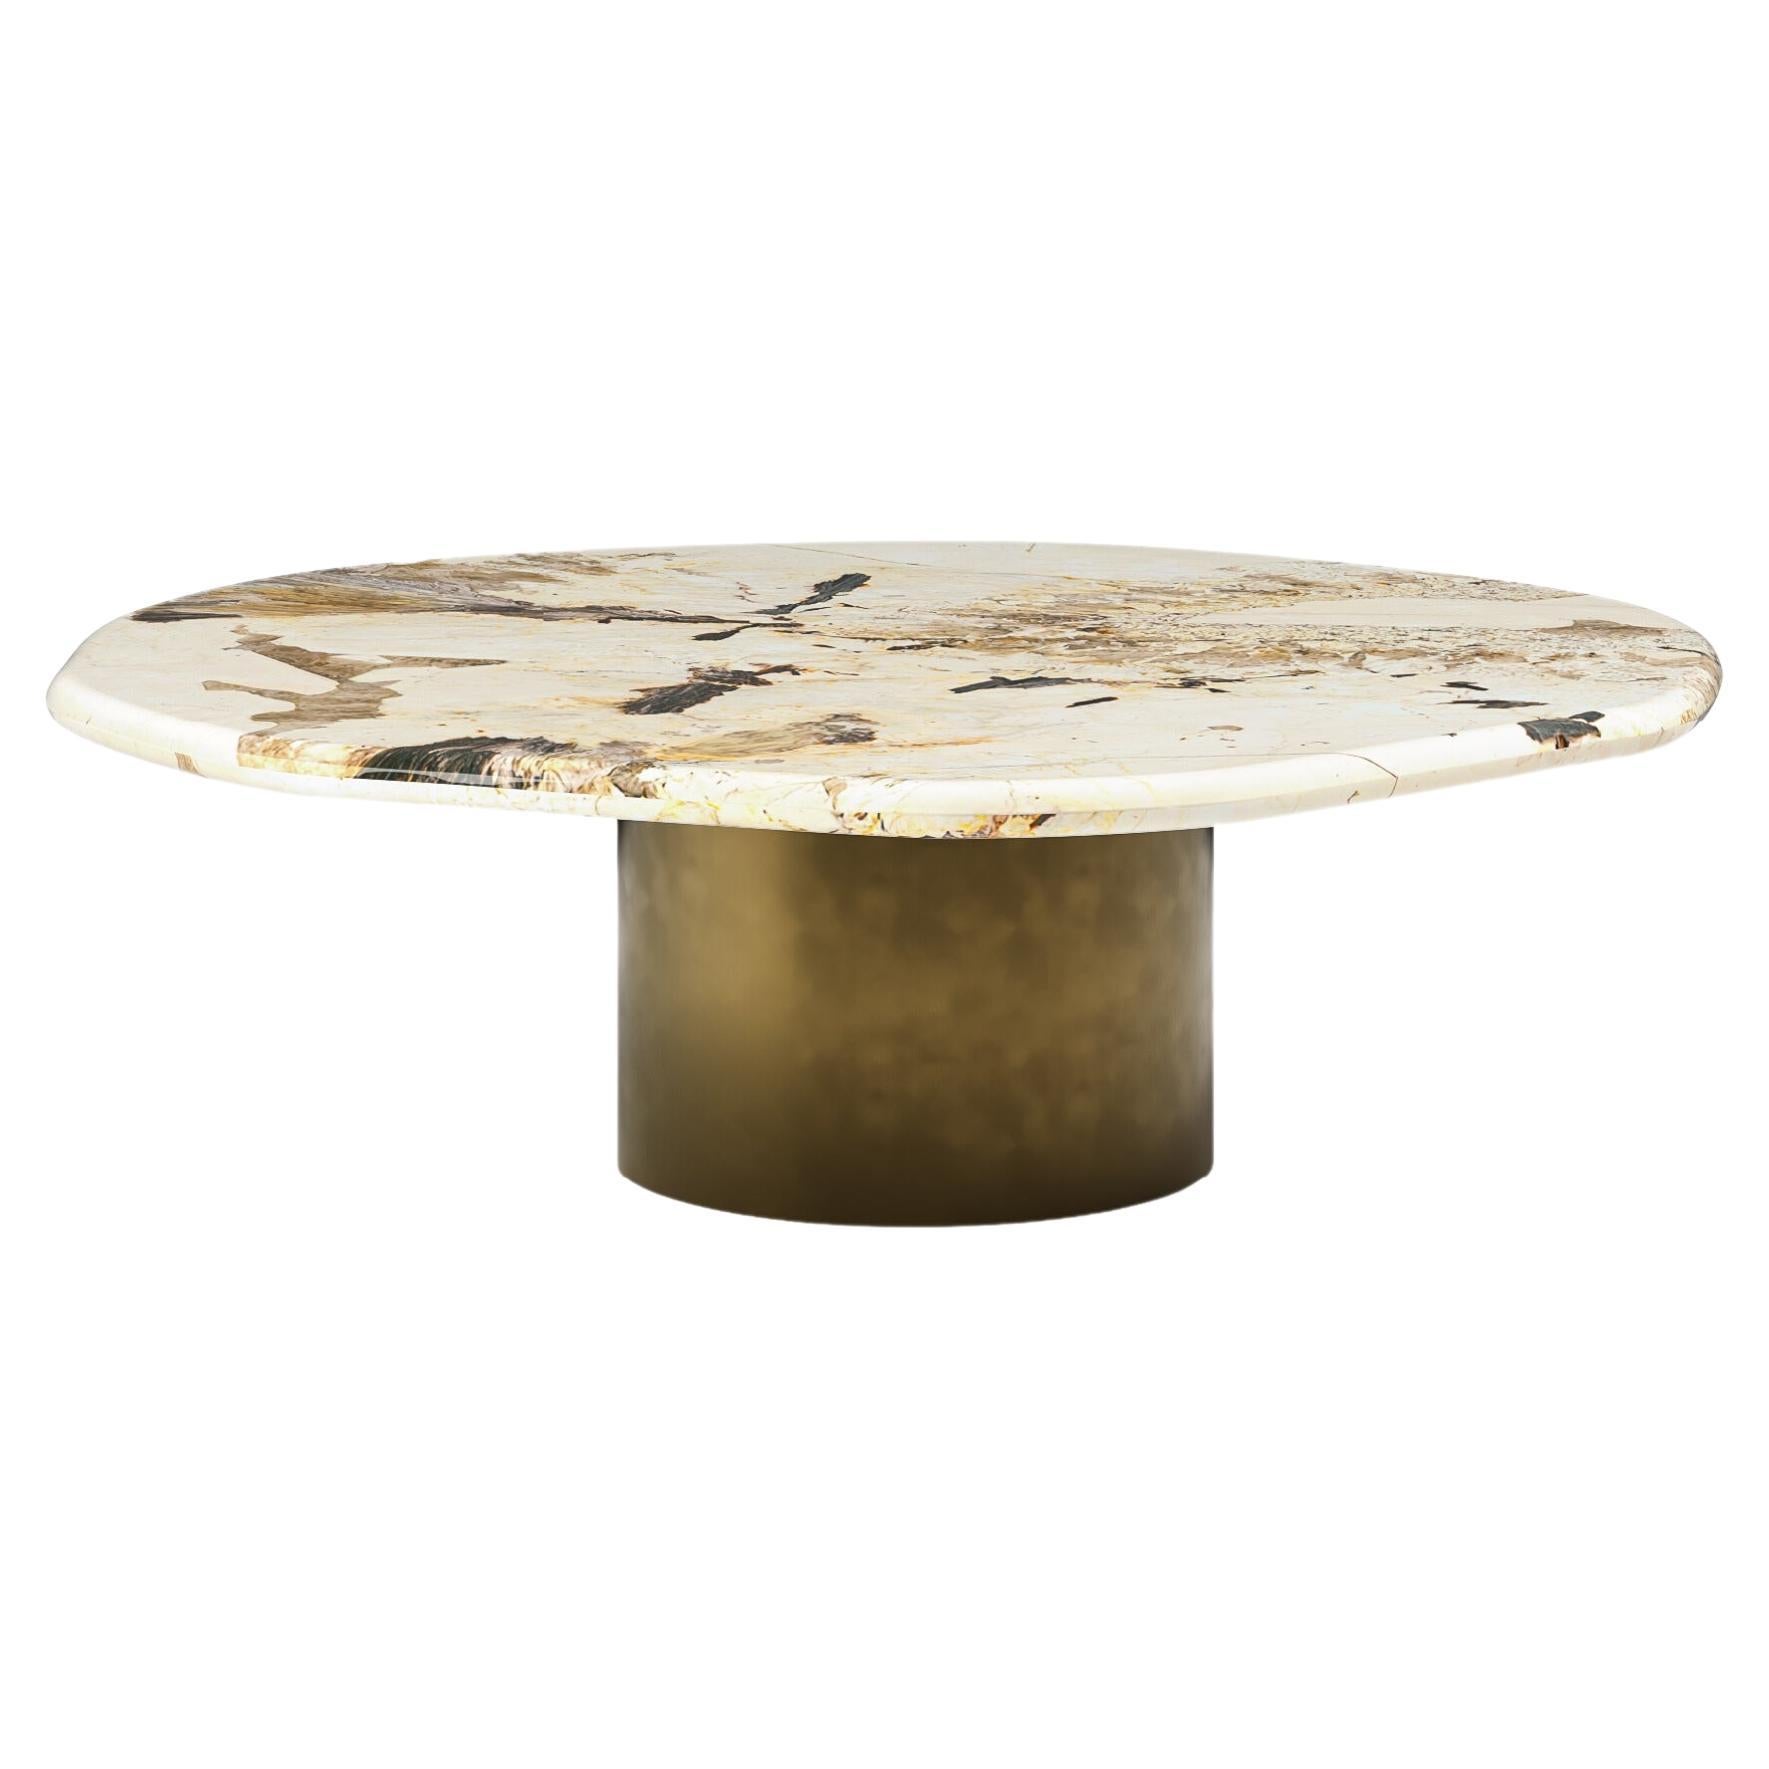 FORM(LA) Lago Round Coffee Table 60”L x 60”W x 14”H Quartzite & Antique Bronze For Sale